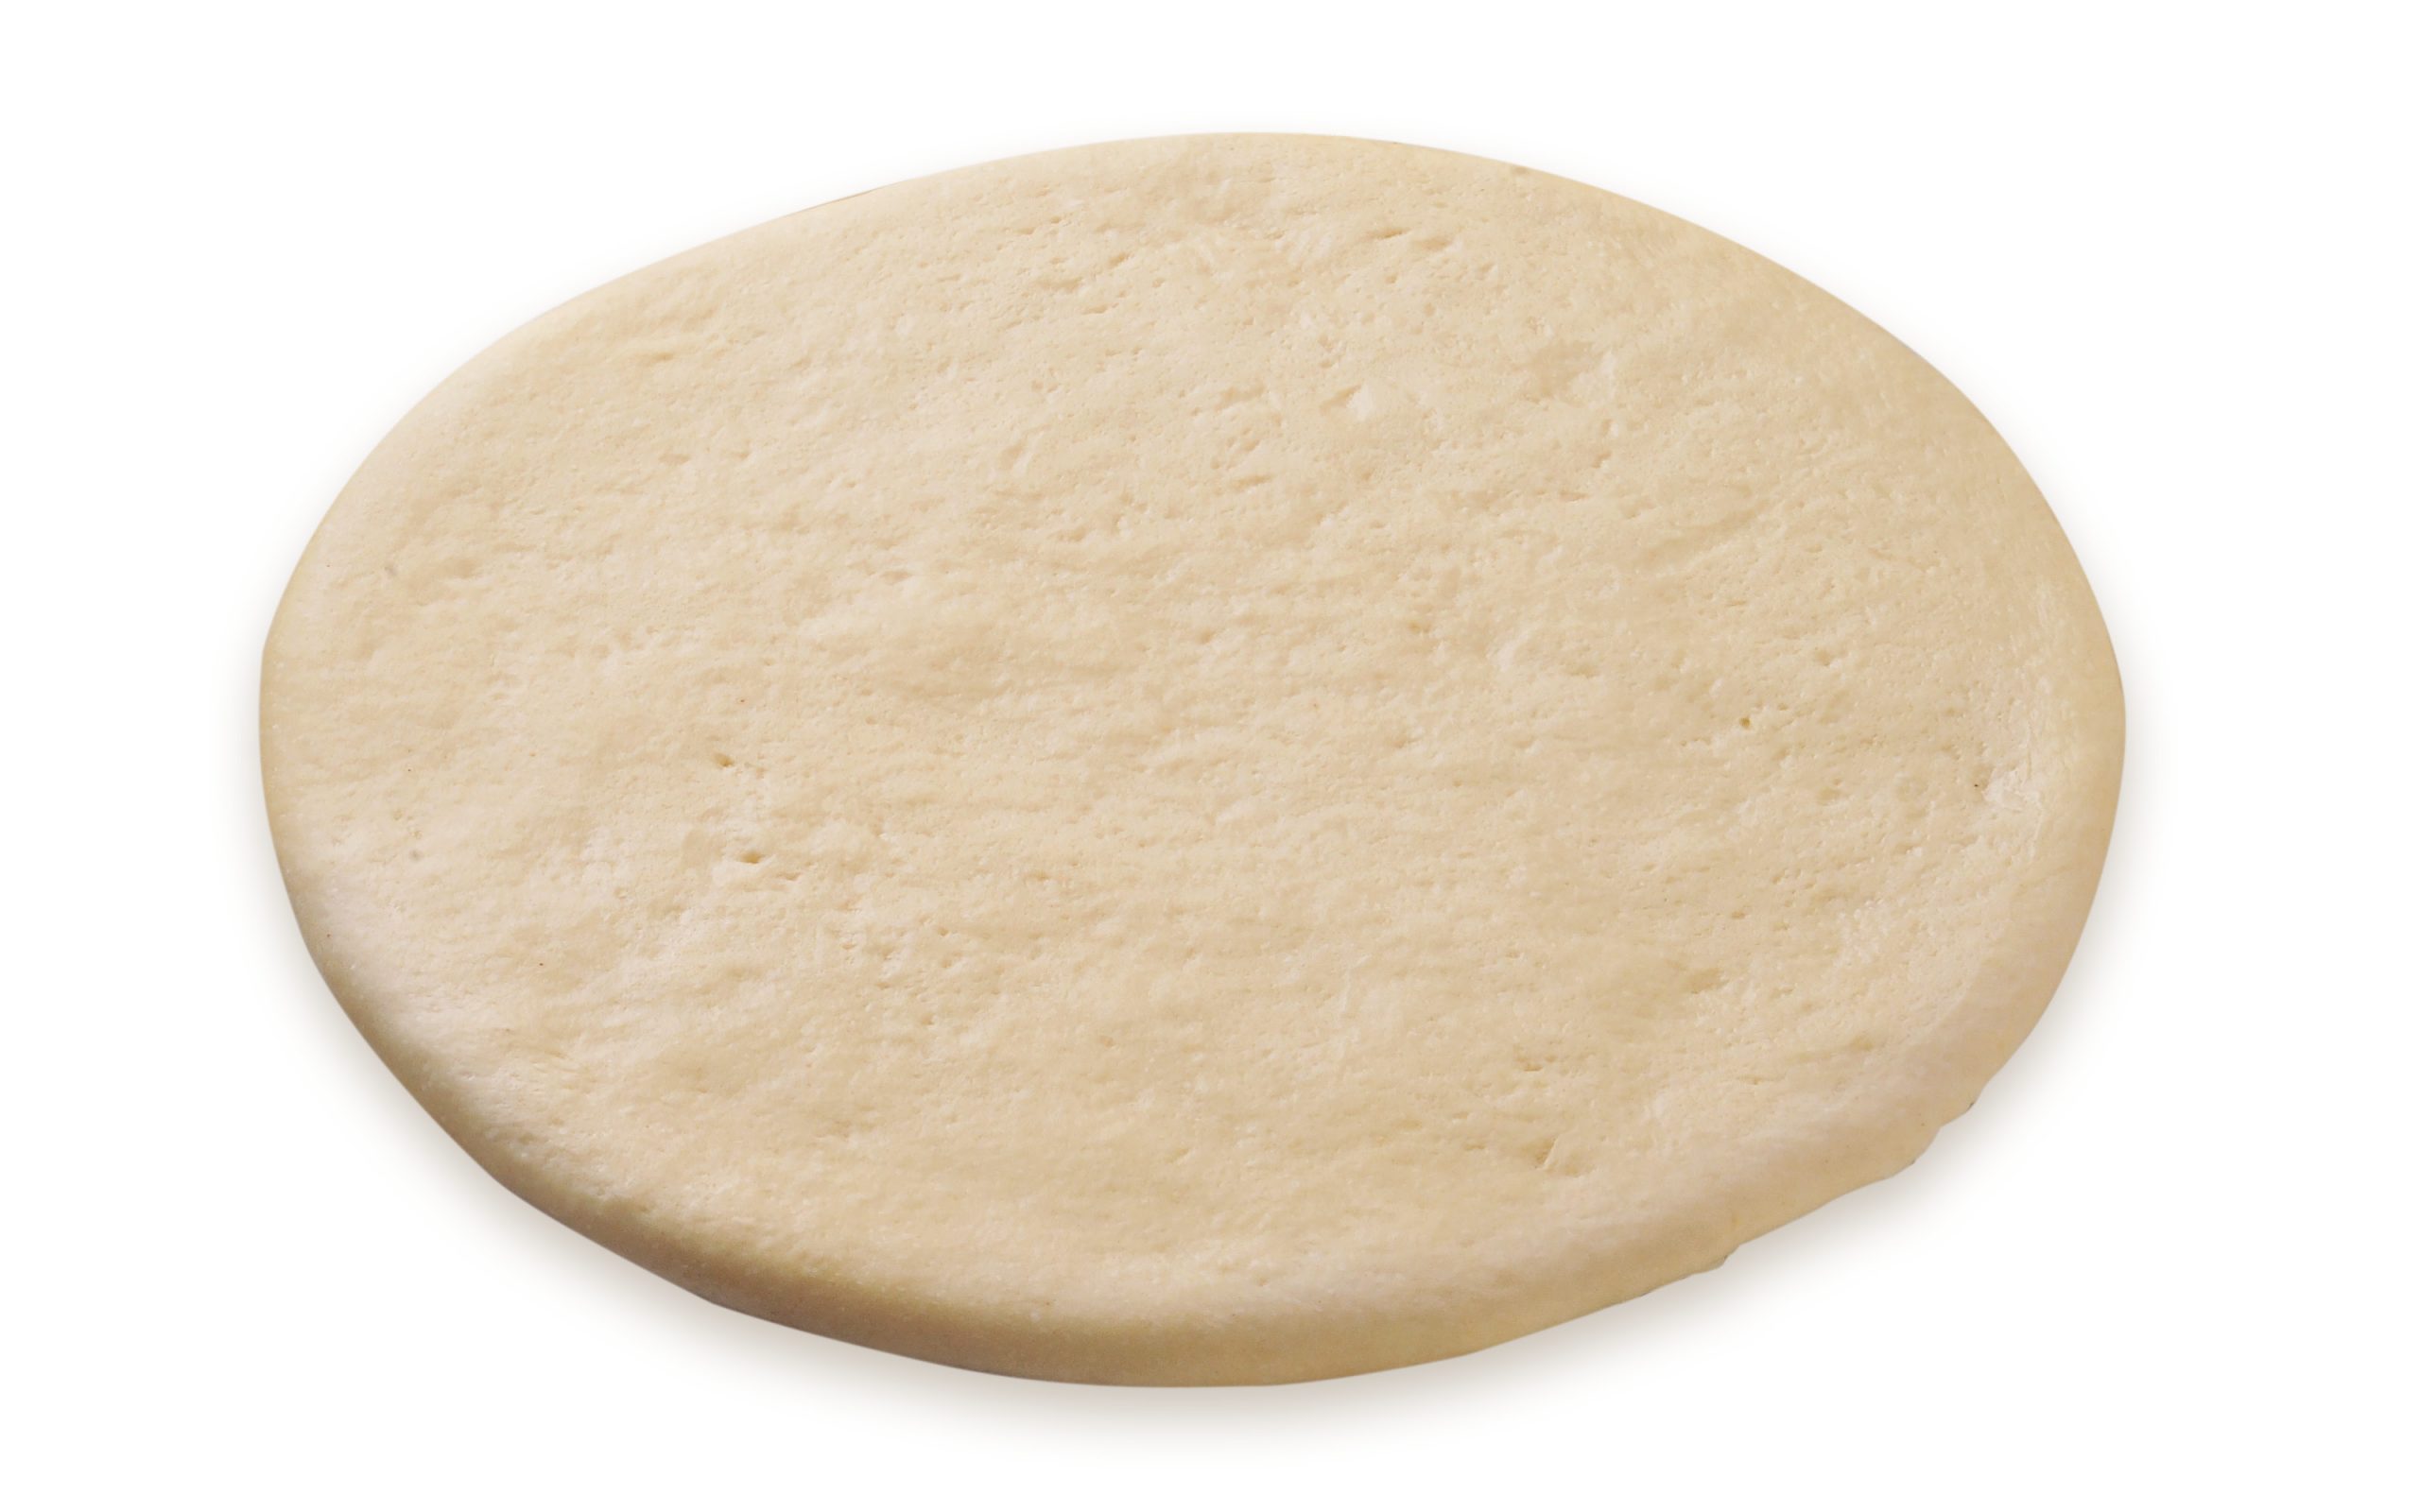 Chickpea dough